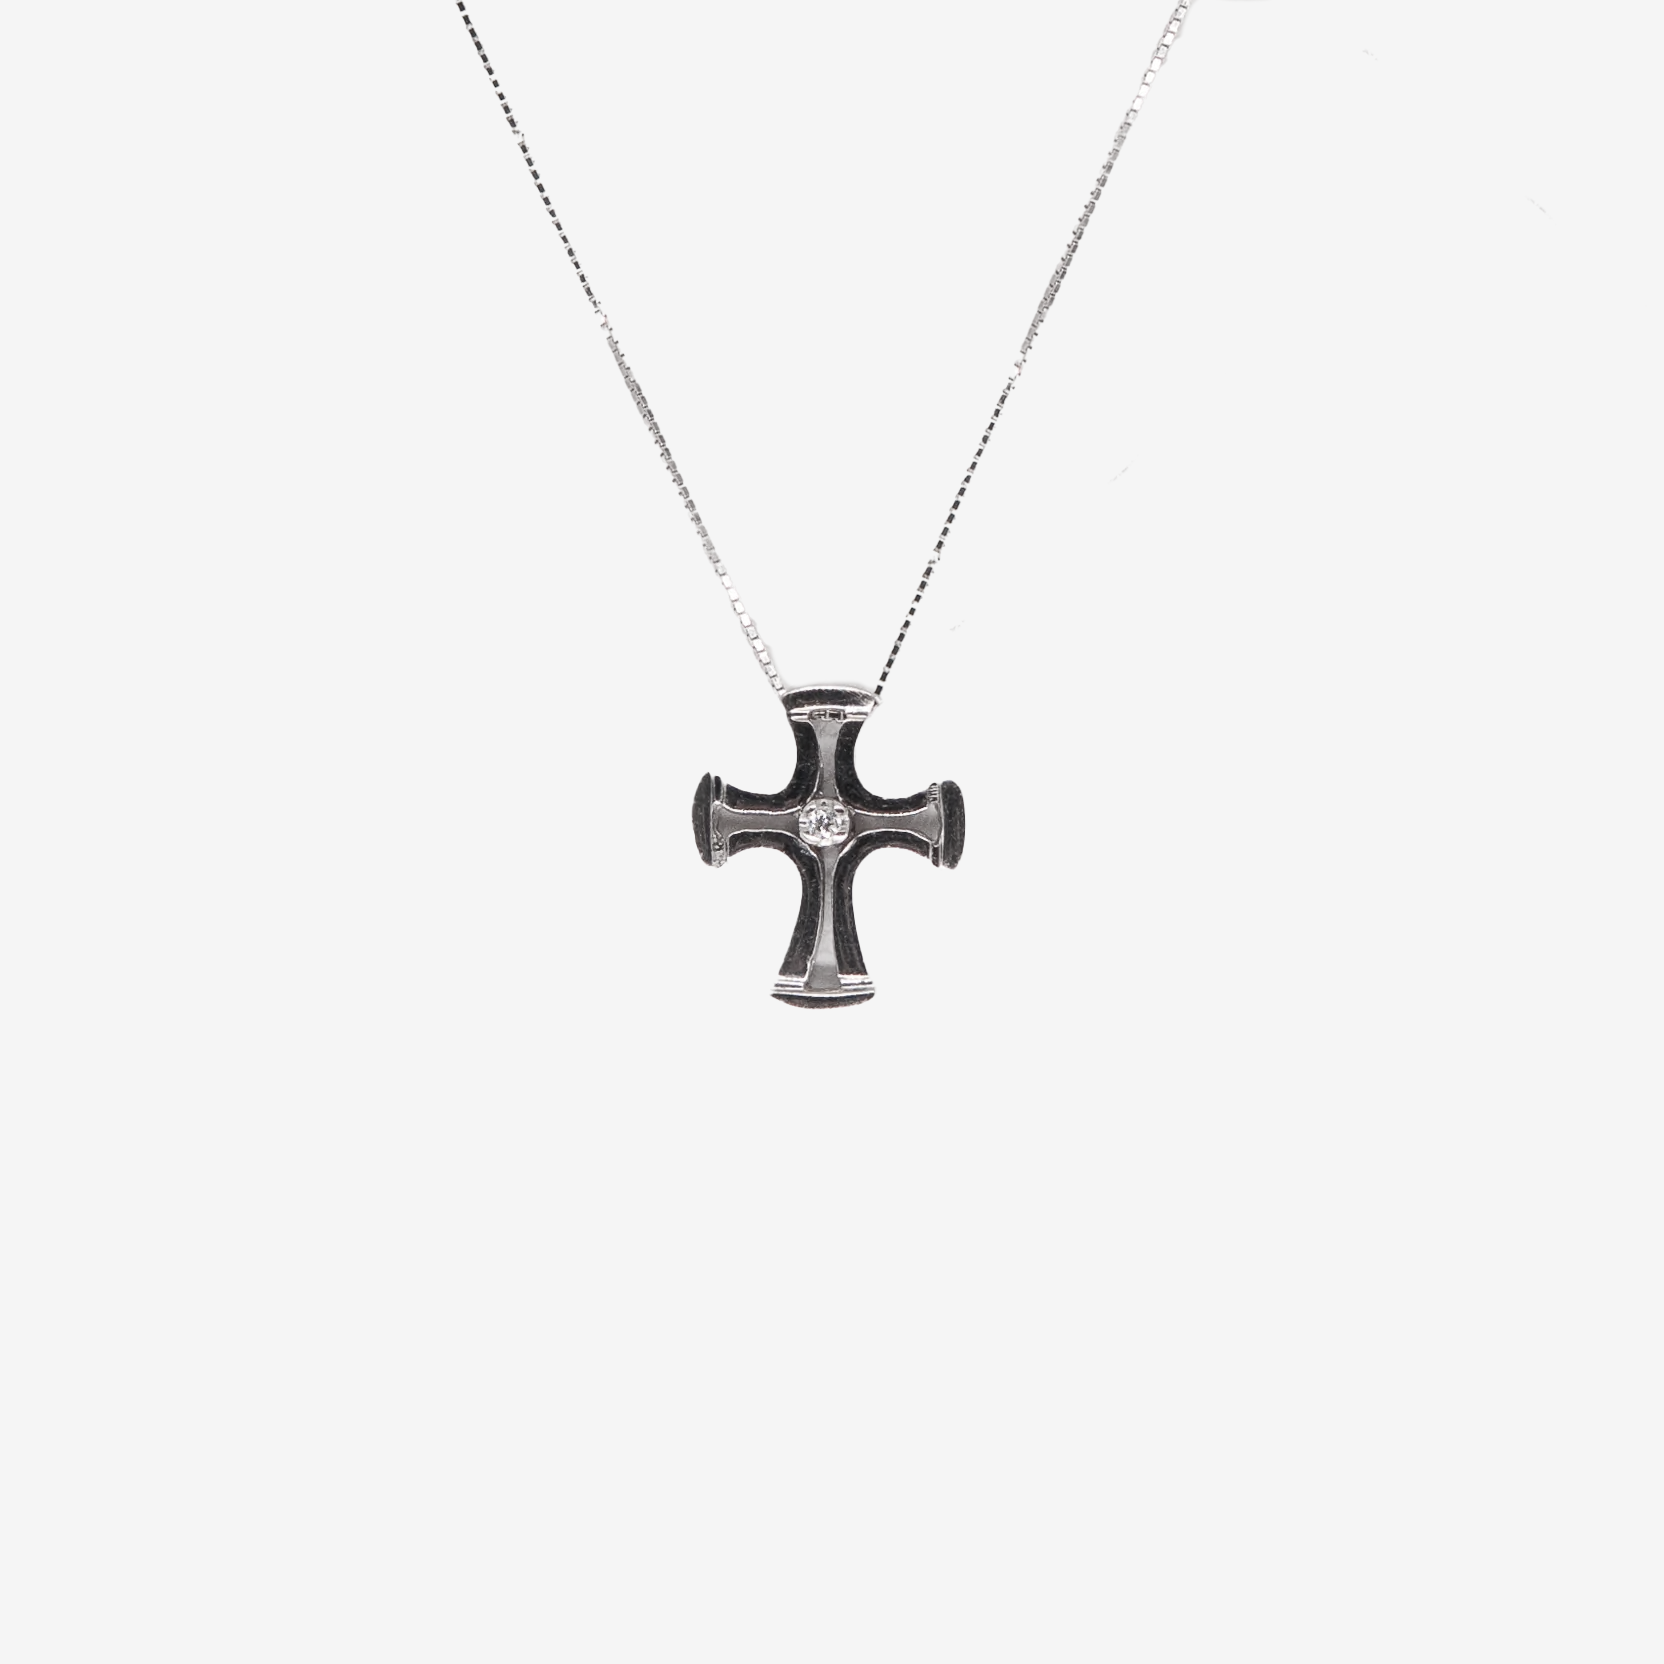 Line cross necklace with diamond